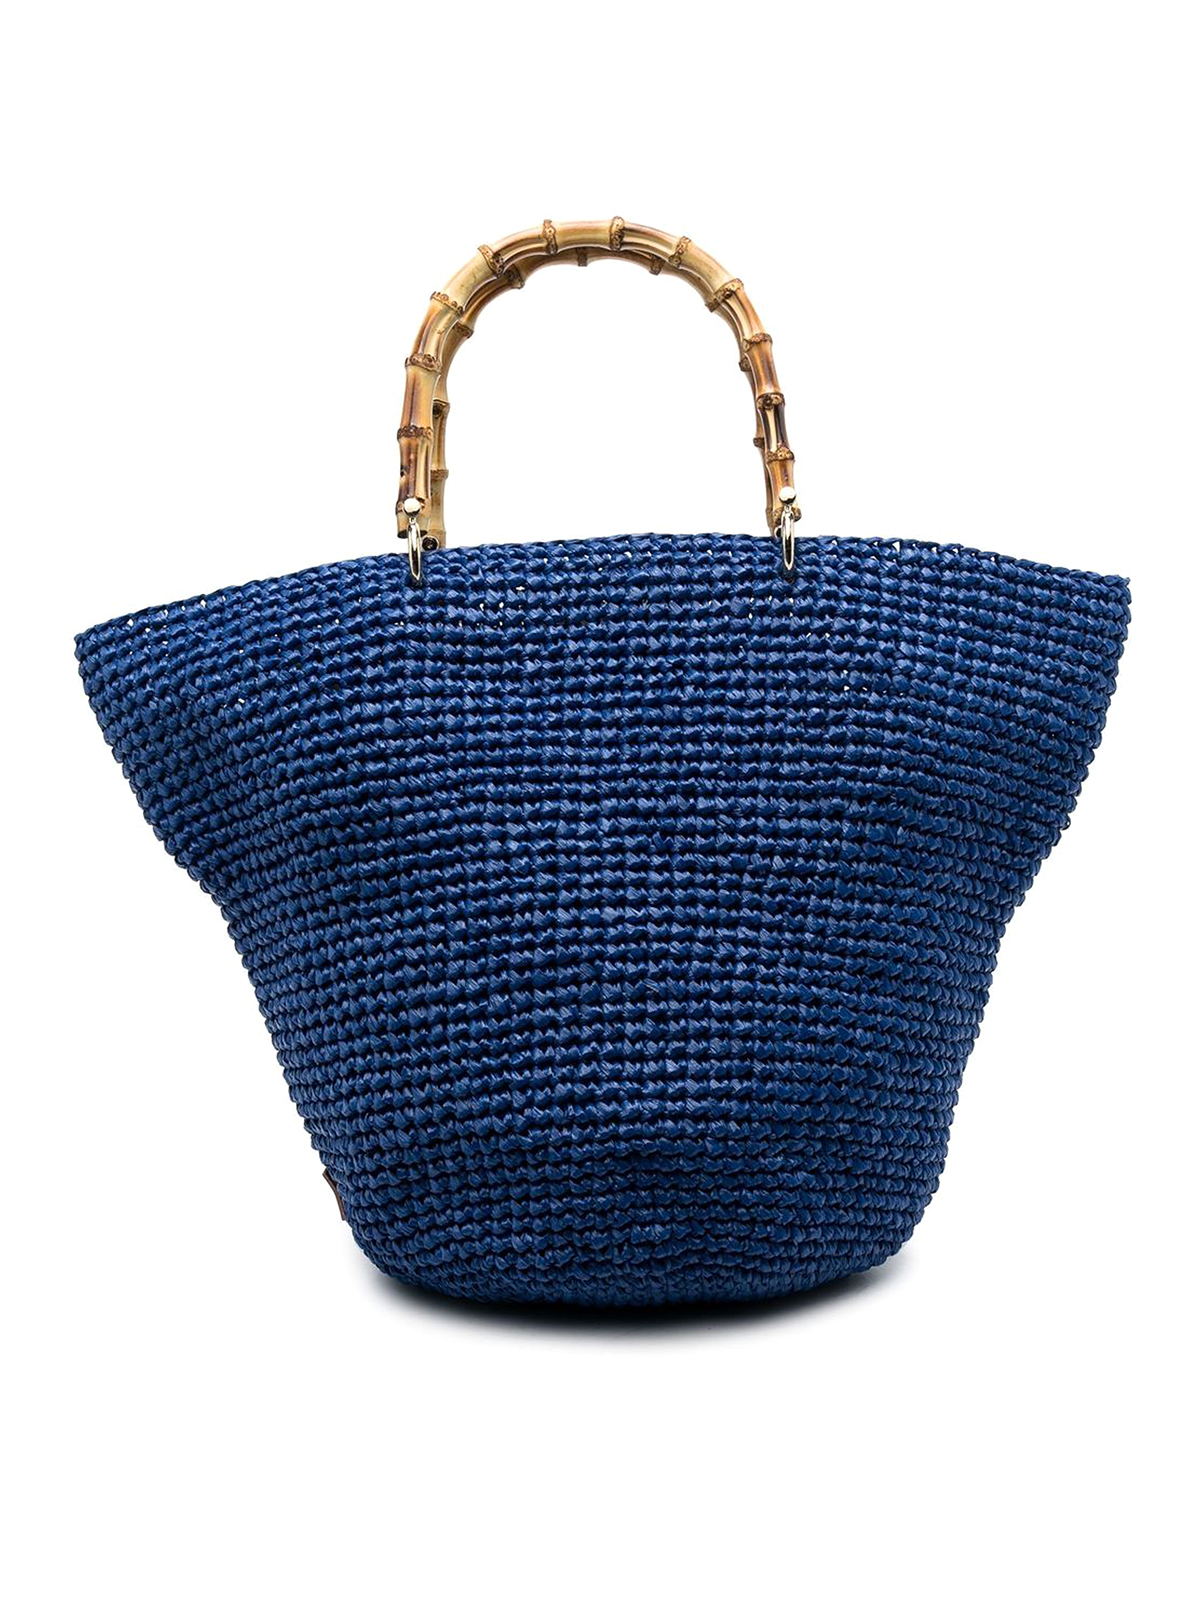 Chica Corolla Straw Handbag In Blue